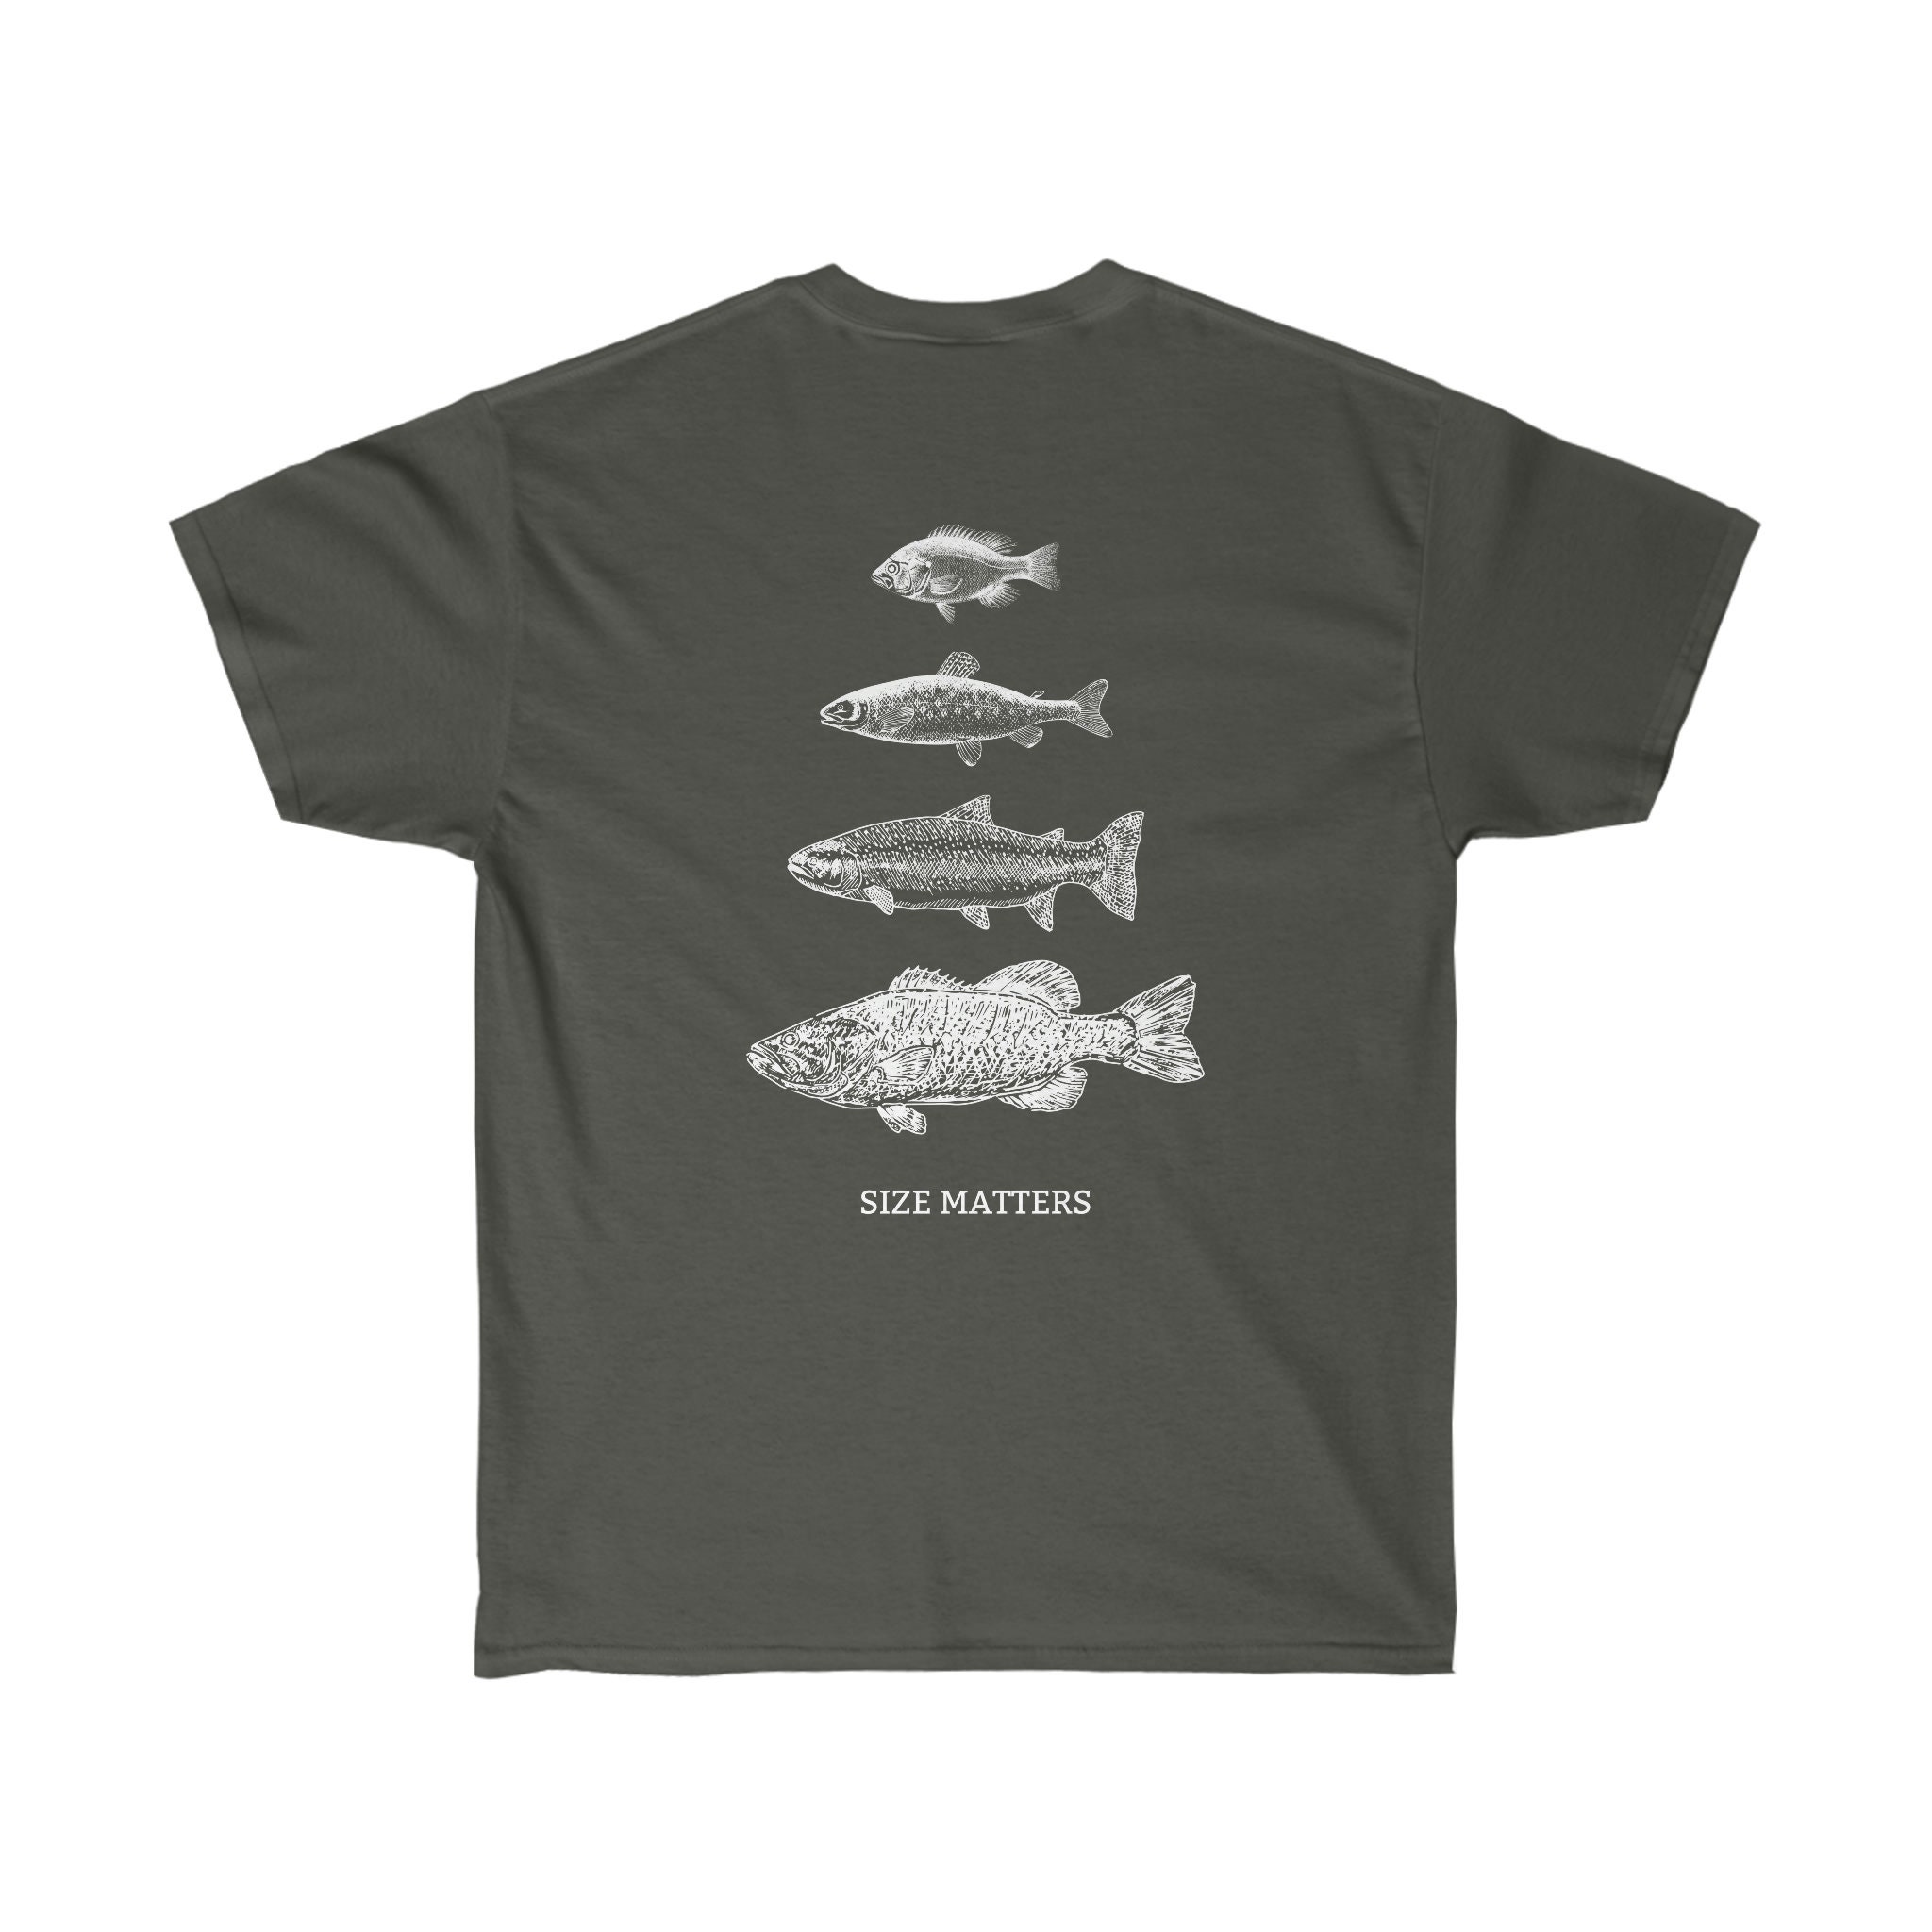 Bass Fish Tshirt Kids Fishing Shirt Fishing Tee Boy Or, 49% OFF